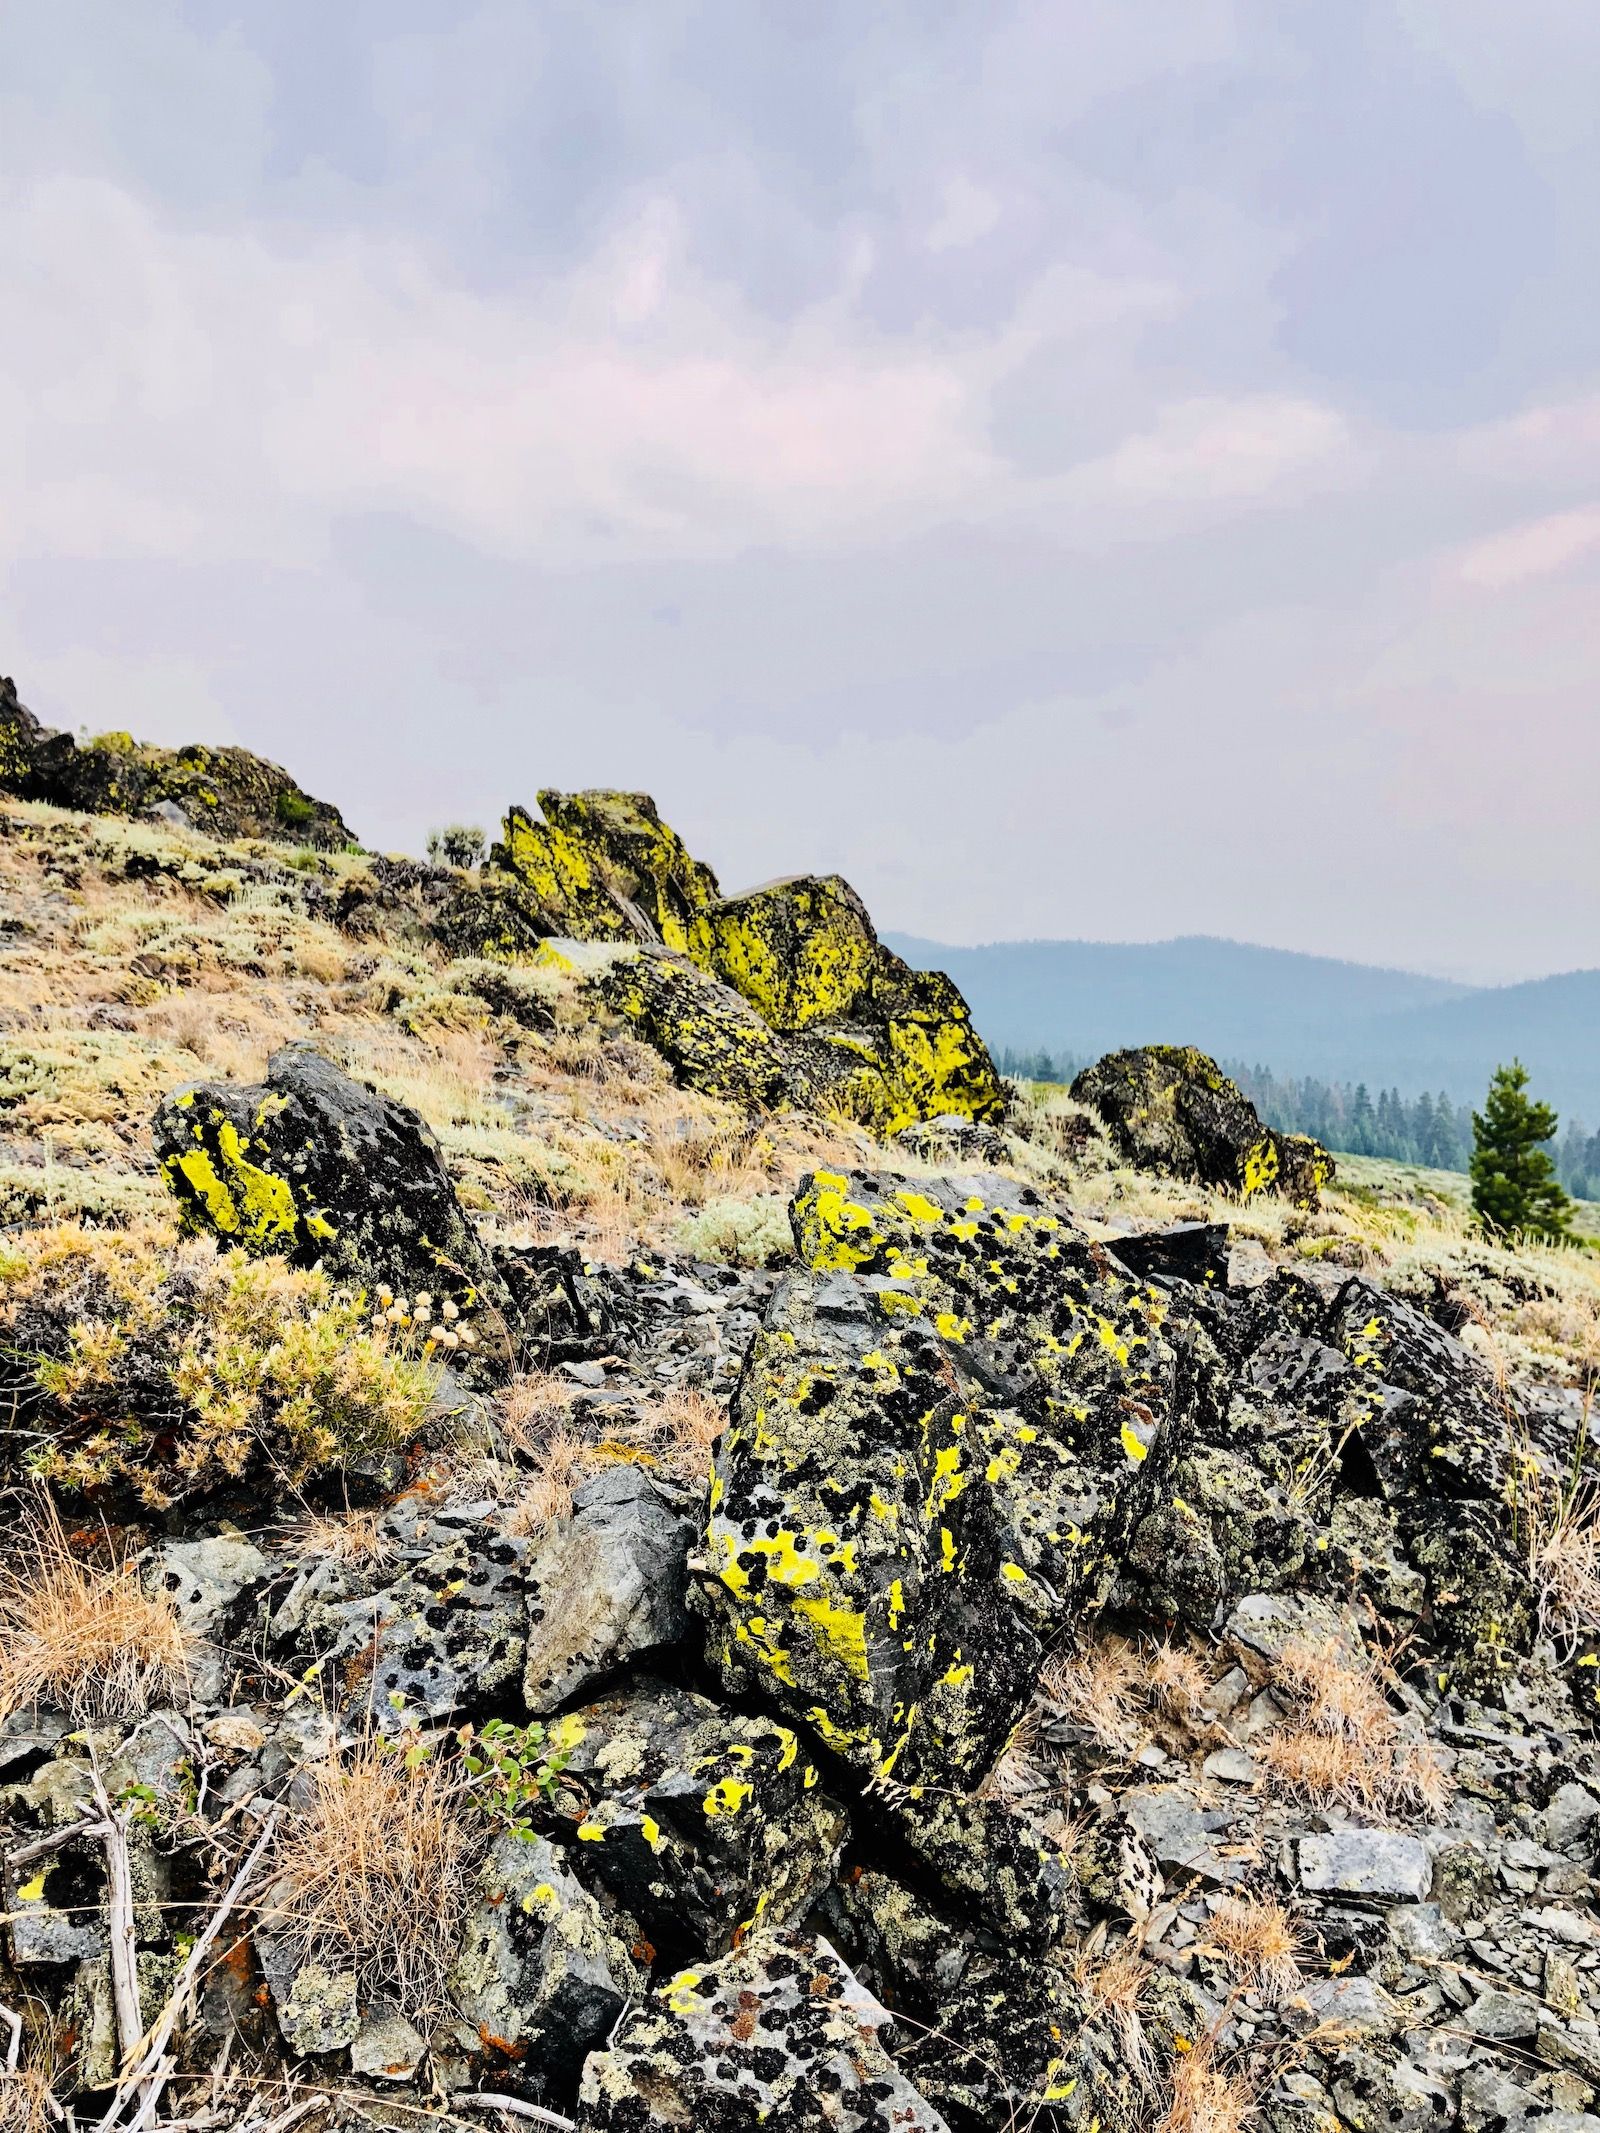 Yellow and black lichen on rocks.